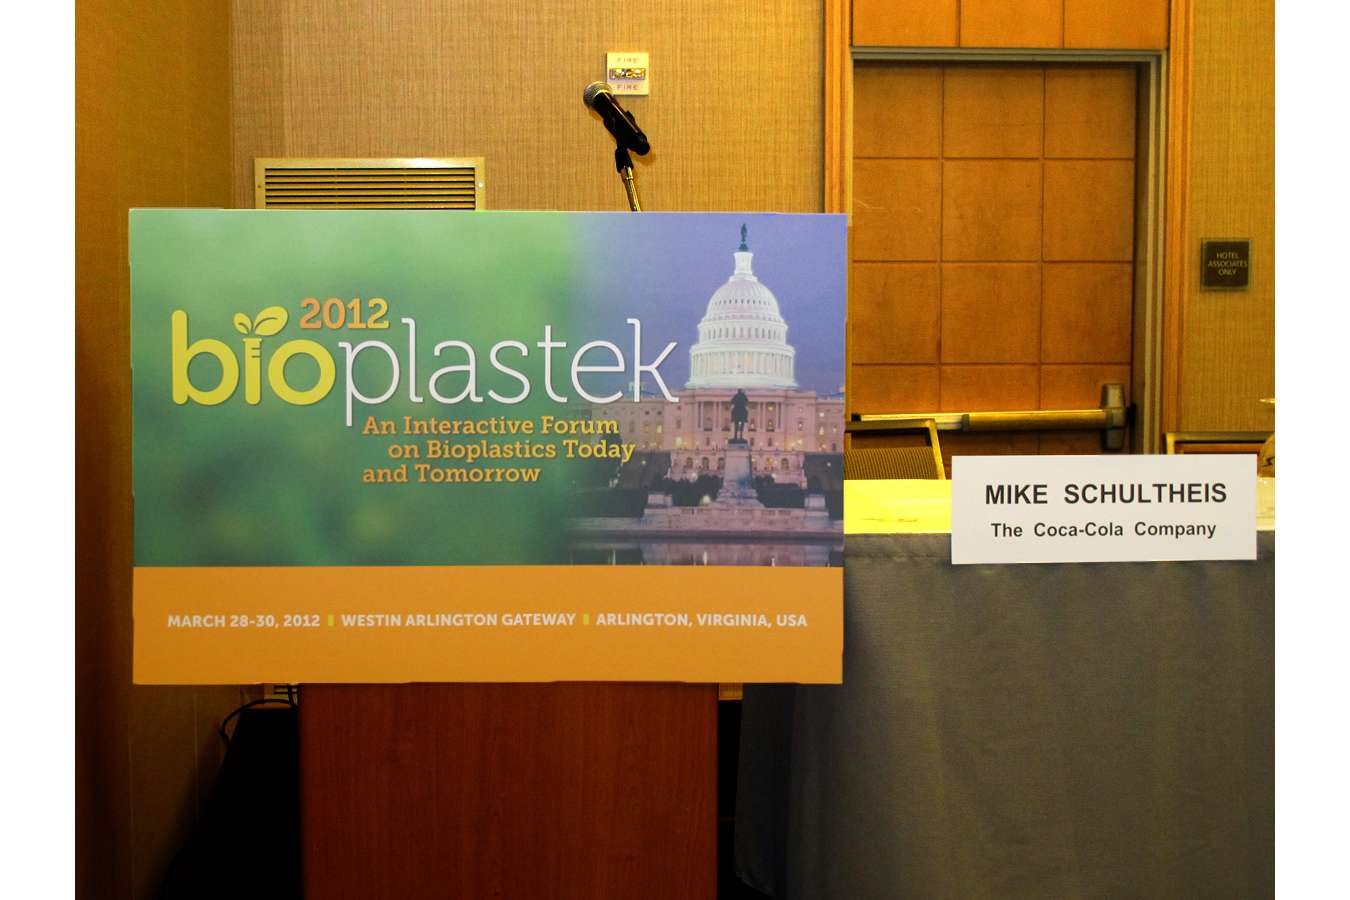 Bio Plastek 1 : Signs designed for the first annual Bioplastek forum were printed on recycled PVC 